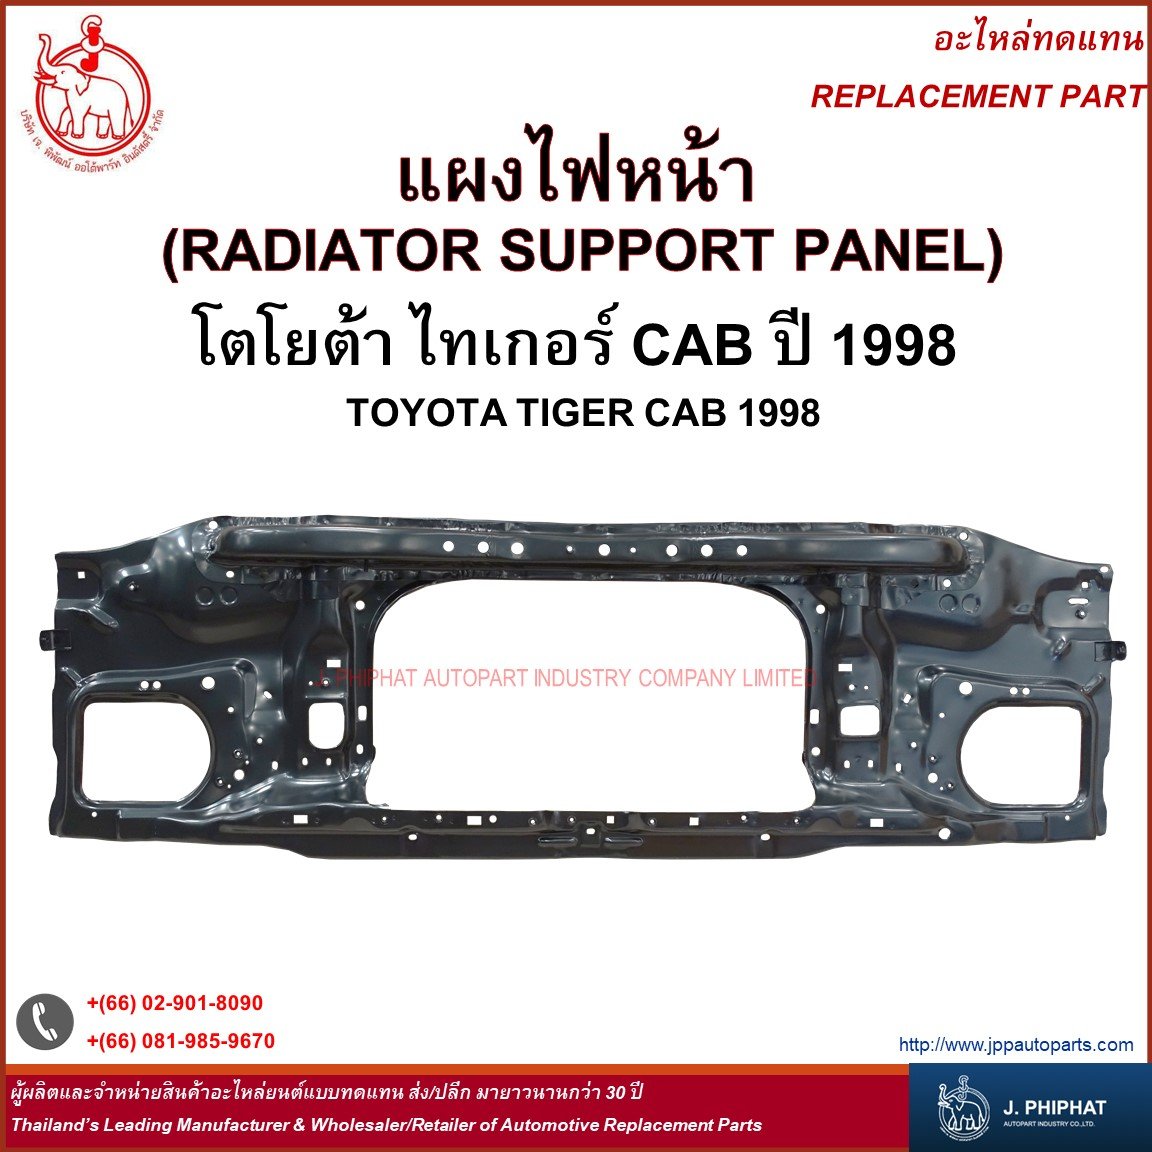 Radiator Support Panel - Toyota Tiger CAB 1998